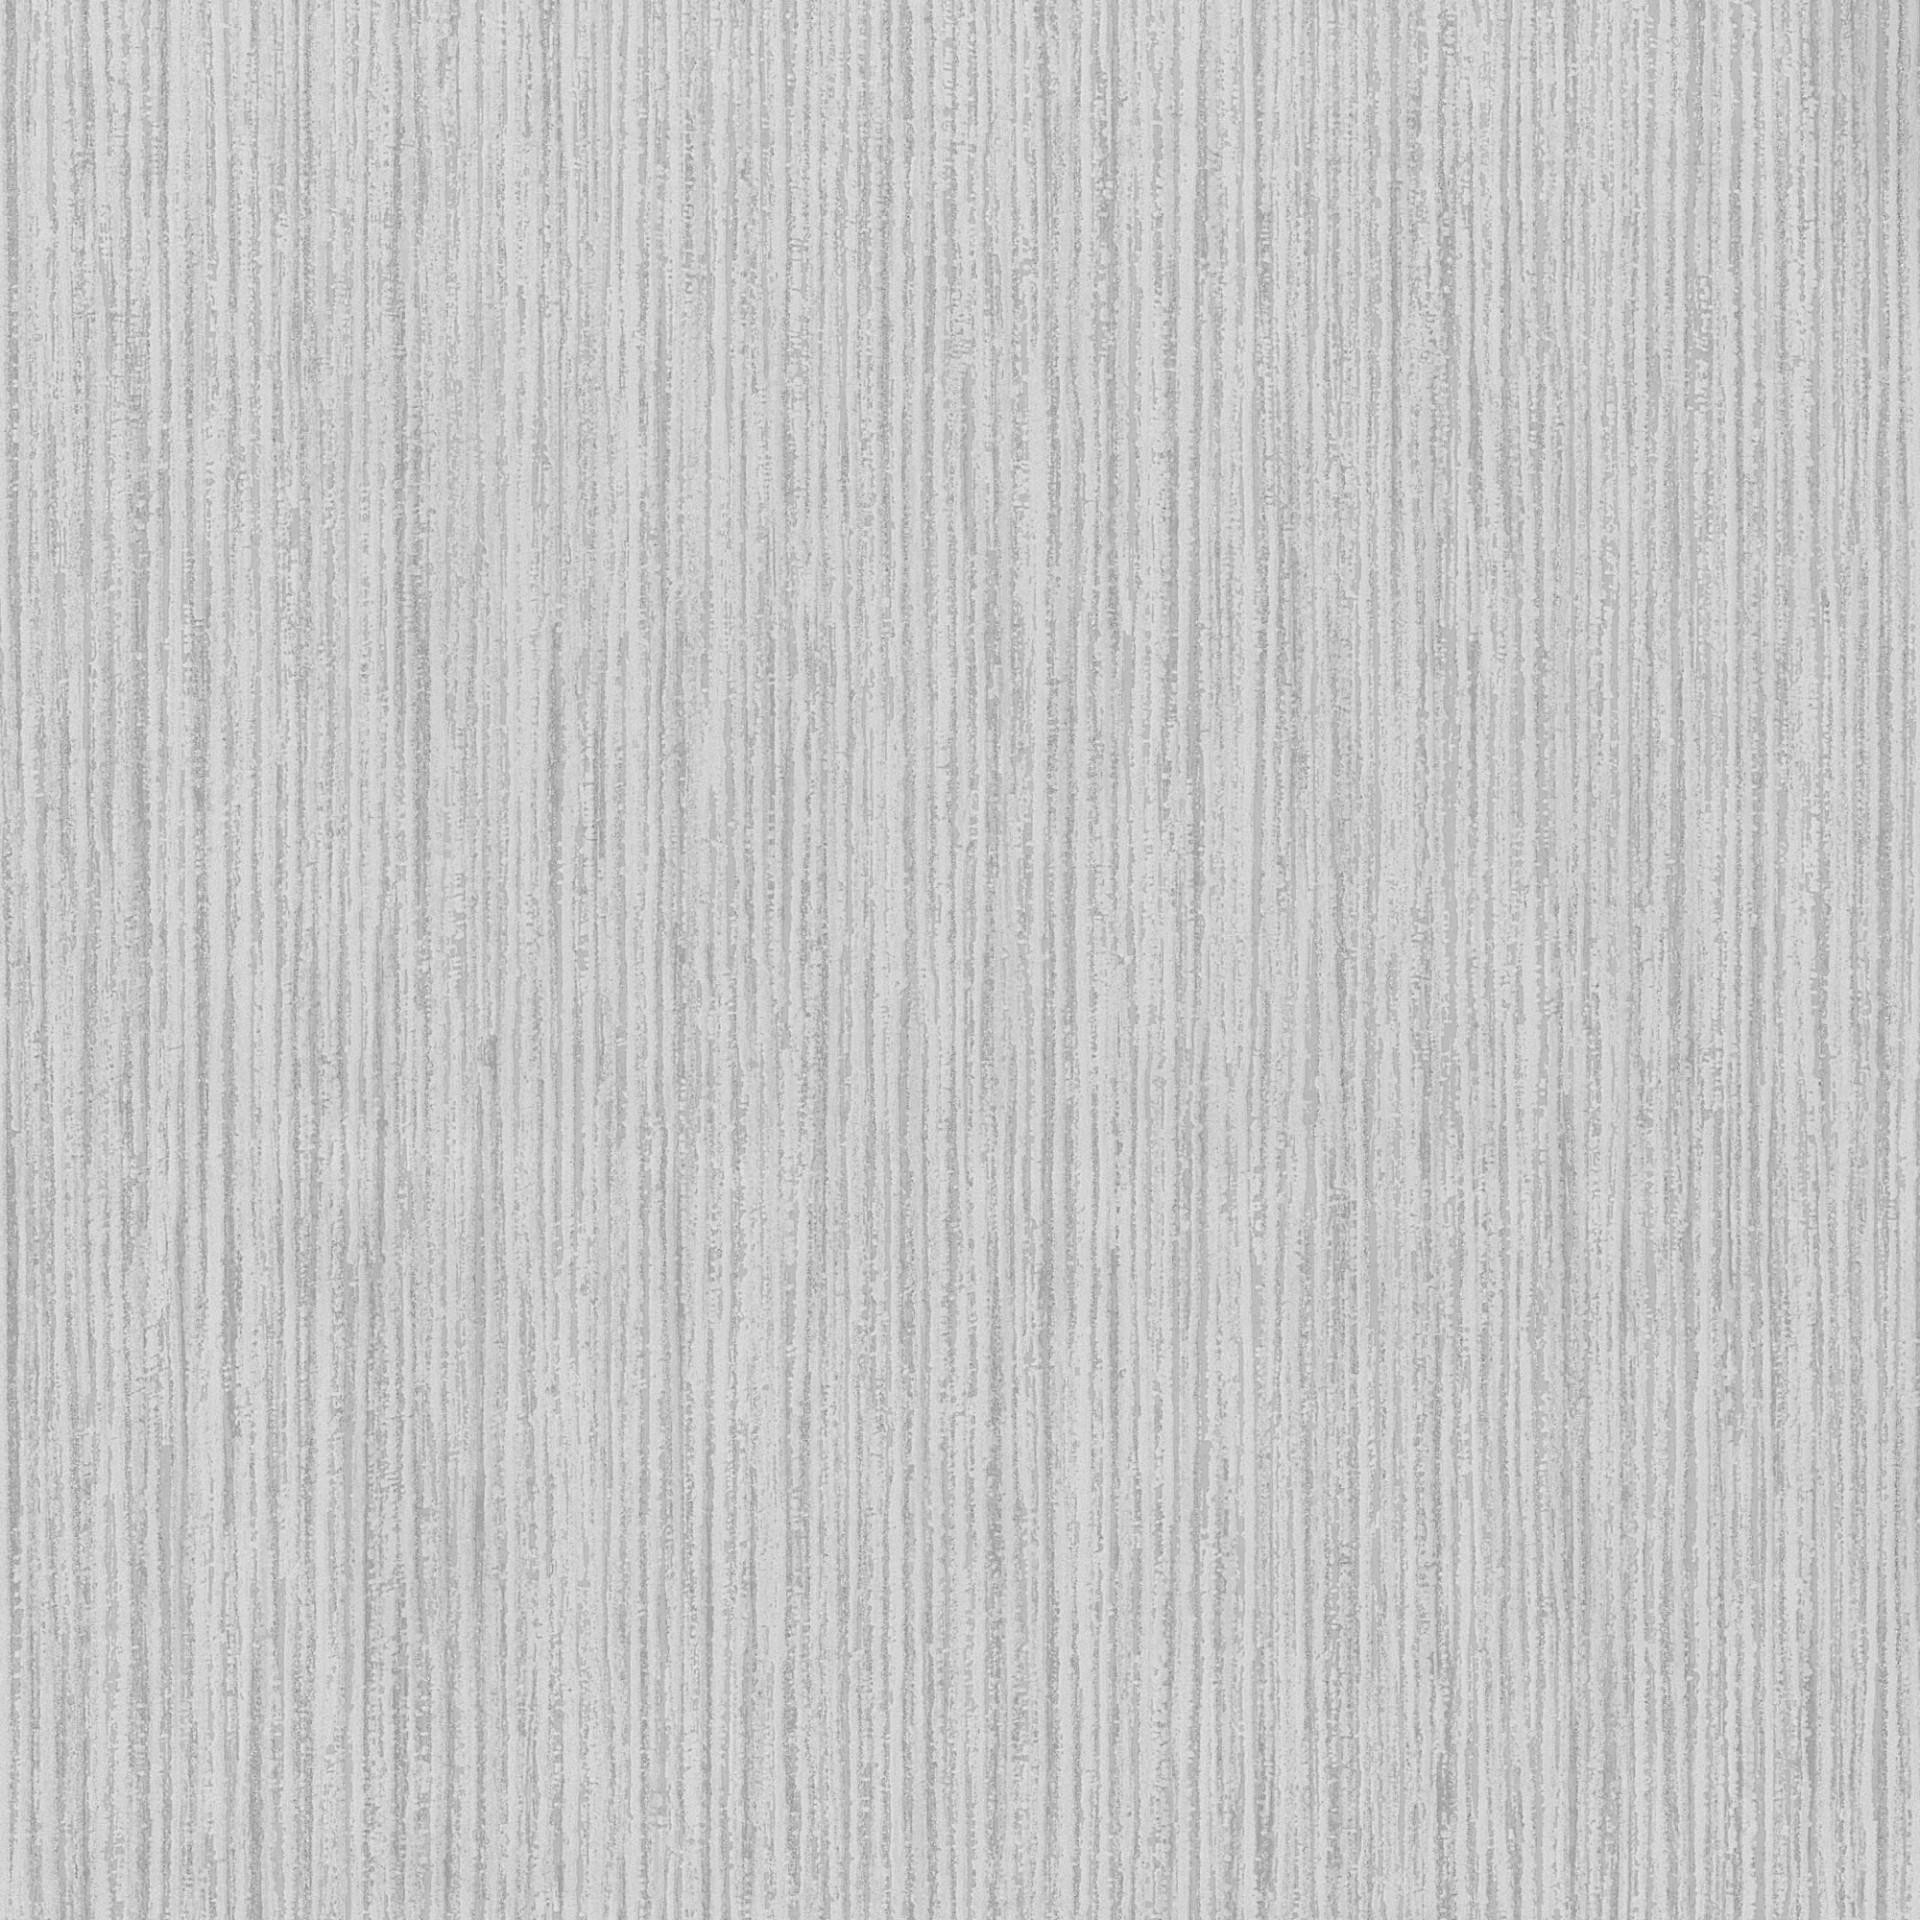 1920x1920 silver grey glitter wallpaper #387332